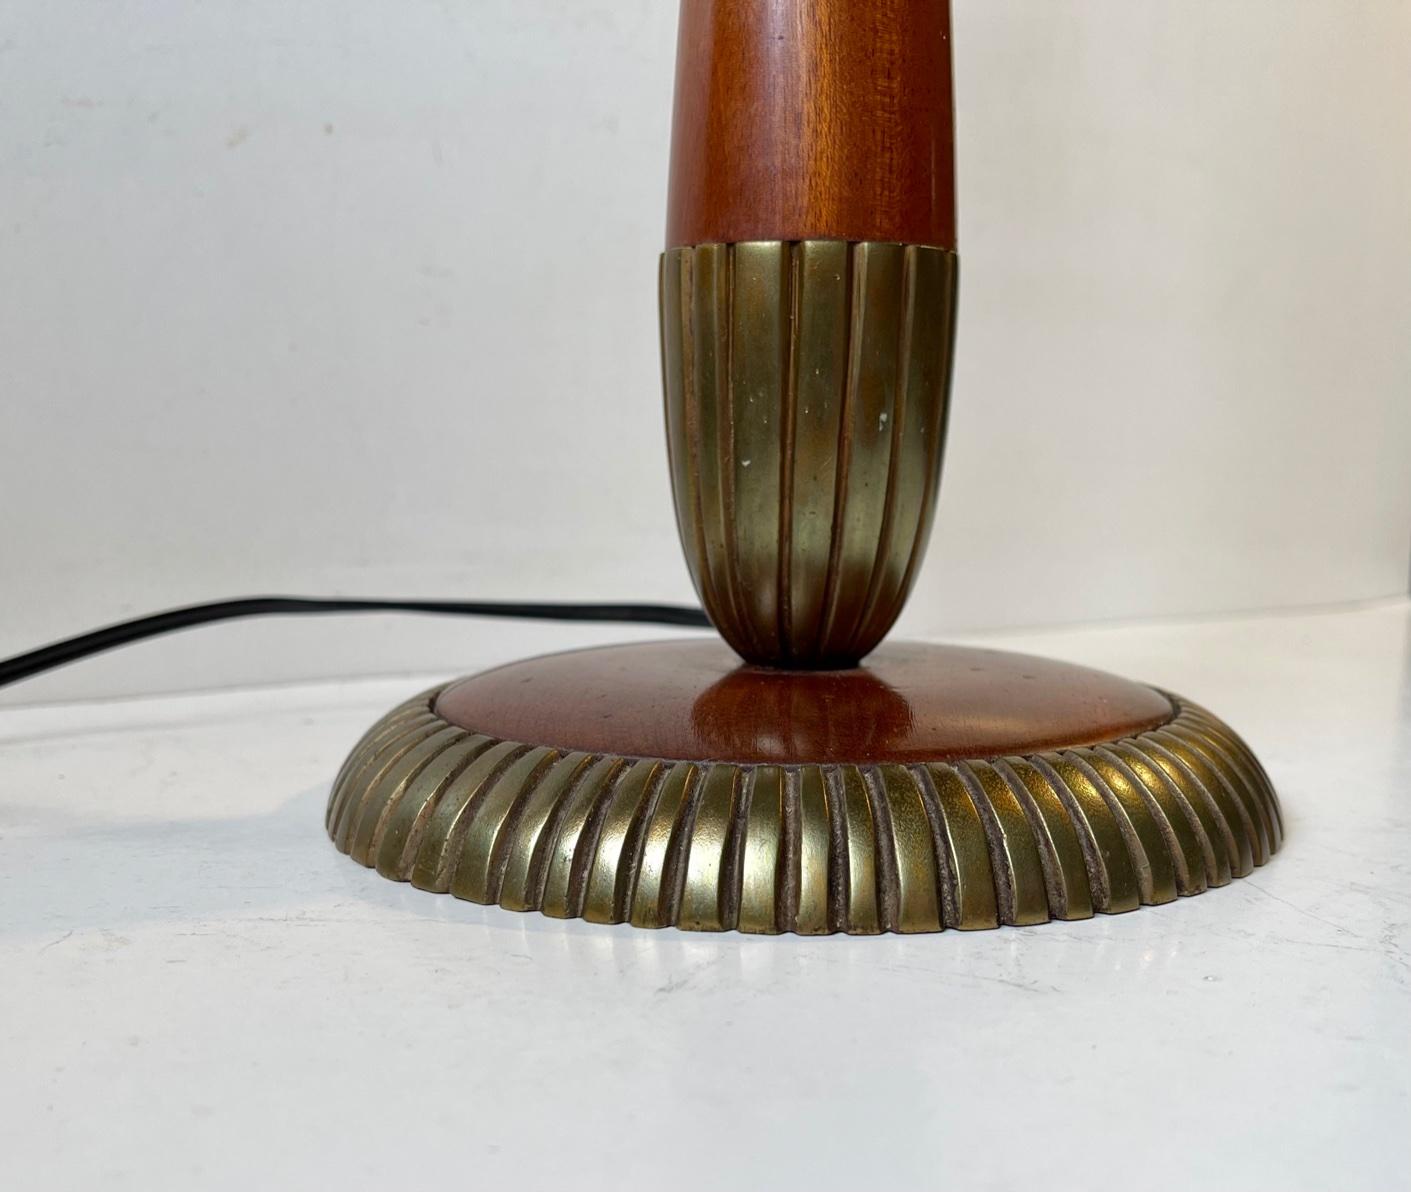 Art Deco Scandinavian Modern Table Lamp in Walnut and Brass, 1950s For Sale